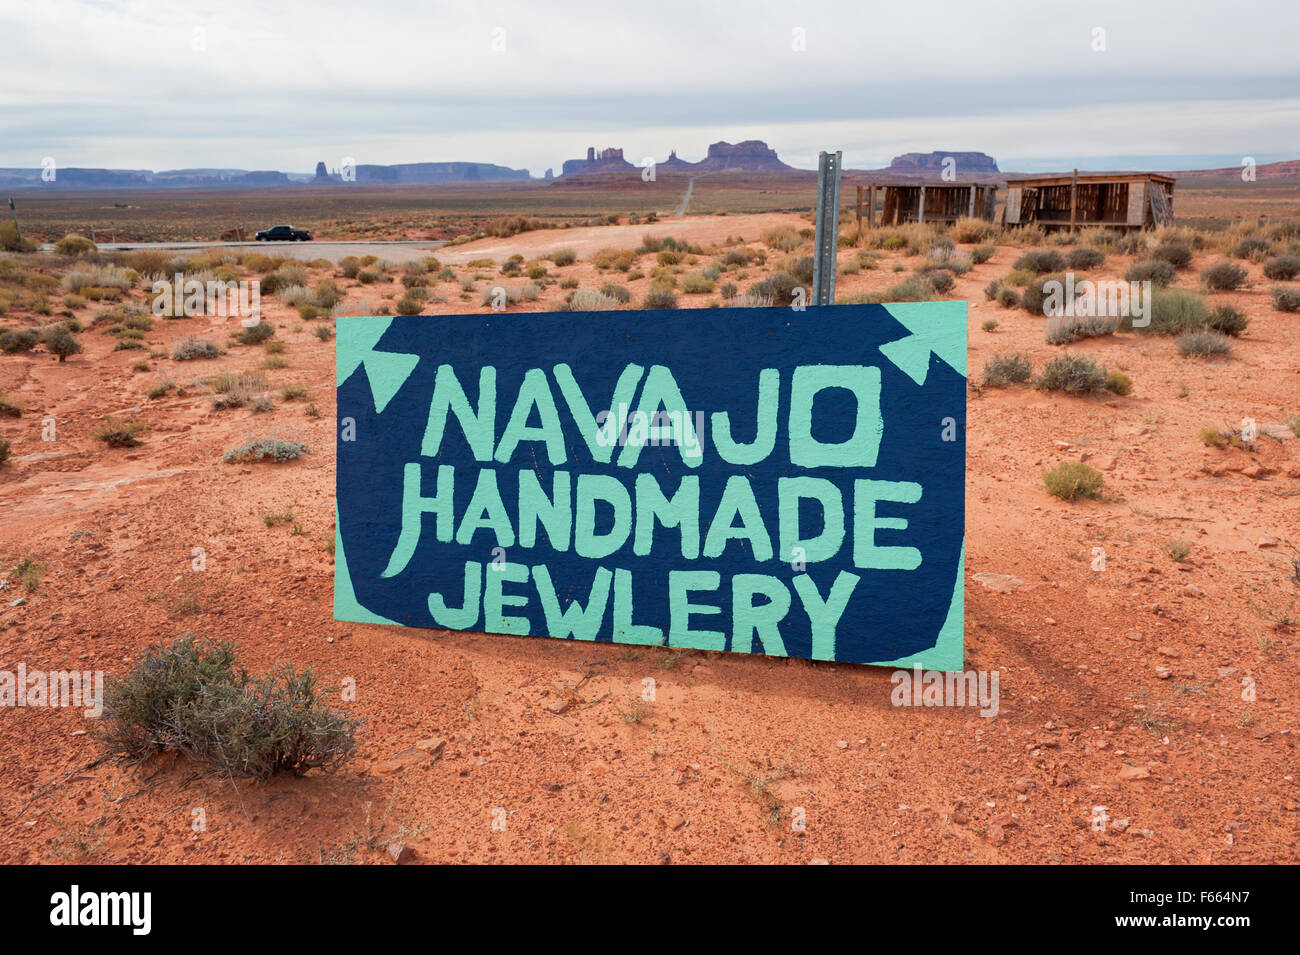 Navajo Jewelry Banque d'image et photos - Alamy